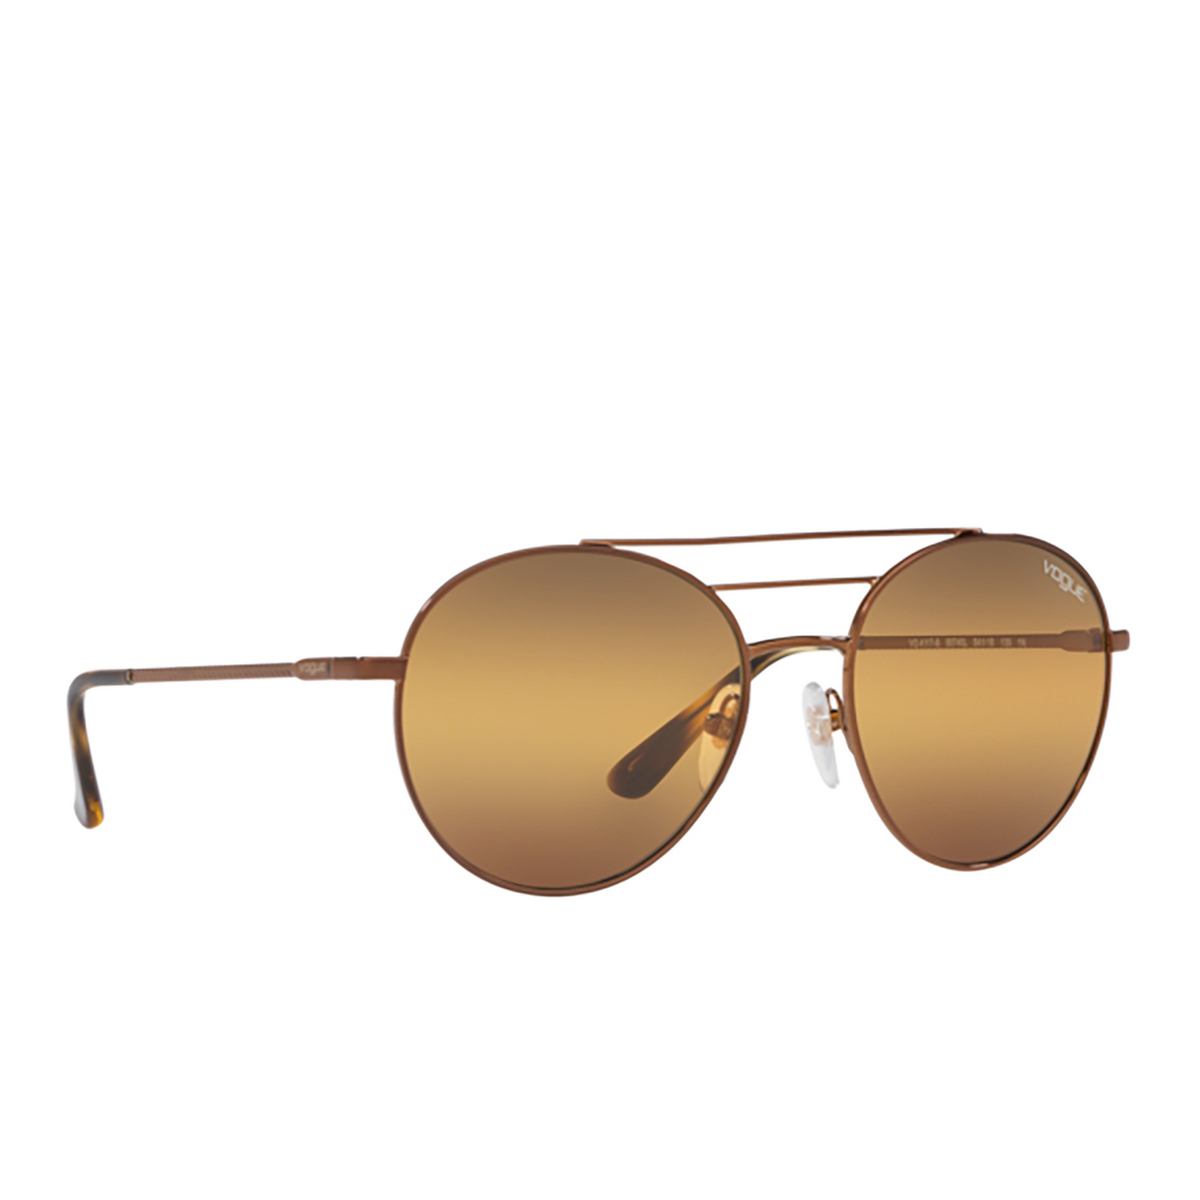 Vogue® Round Sunglasses: VO4117S color Copper 50740L - three-quarters view.